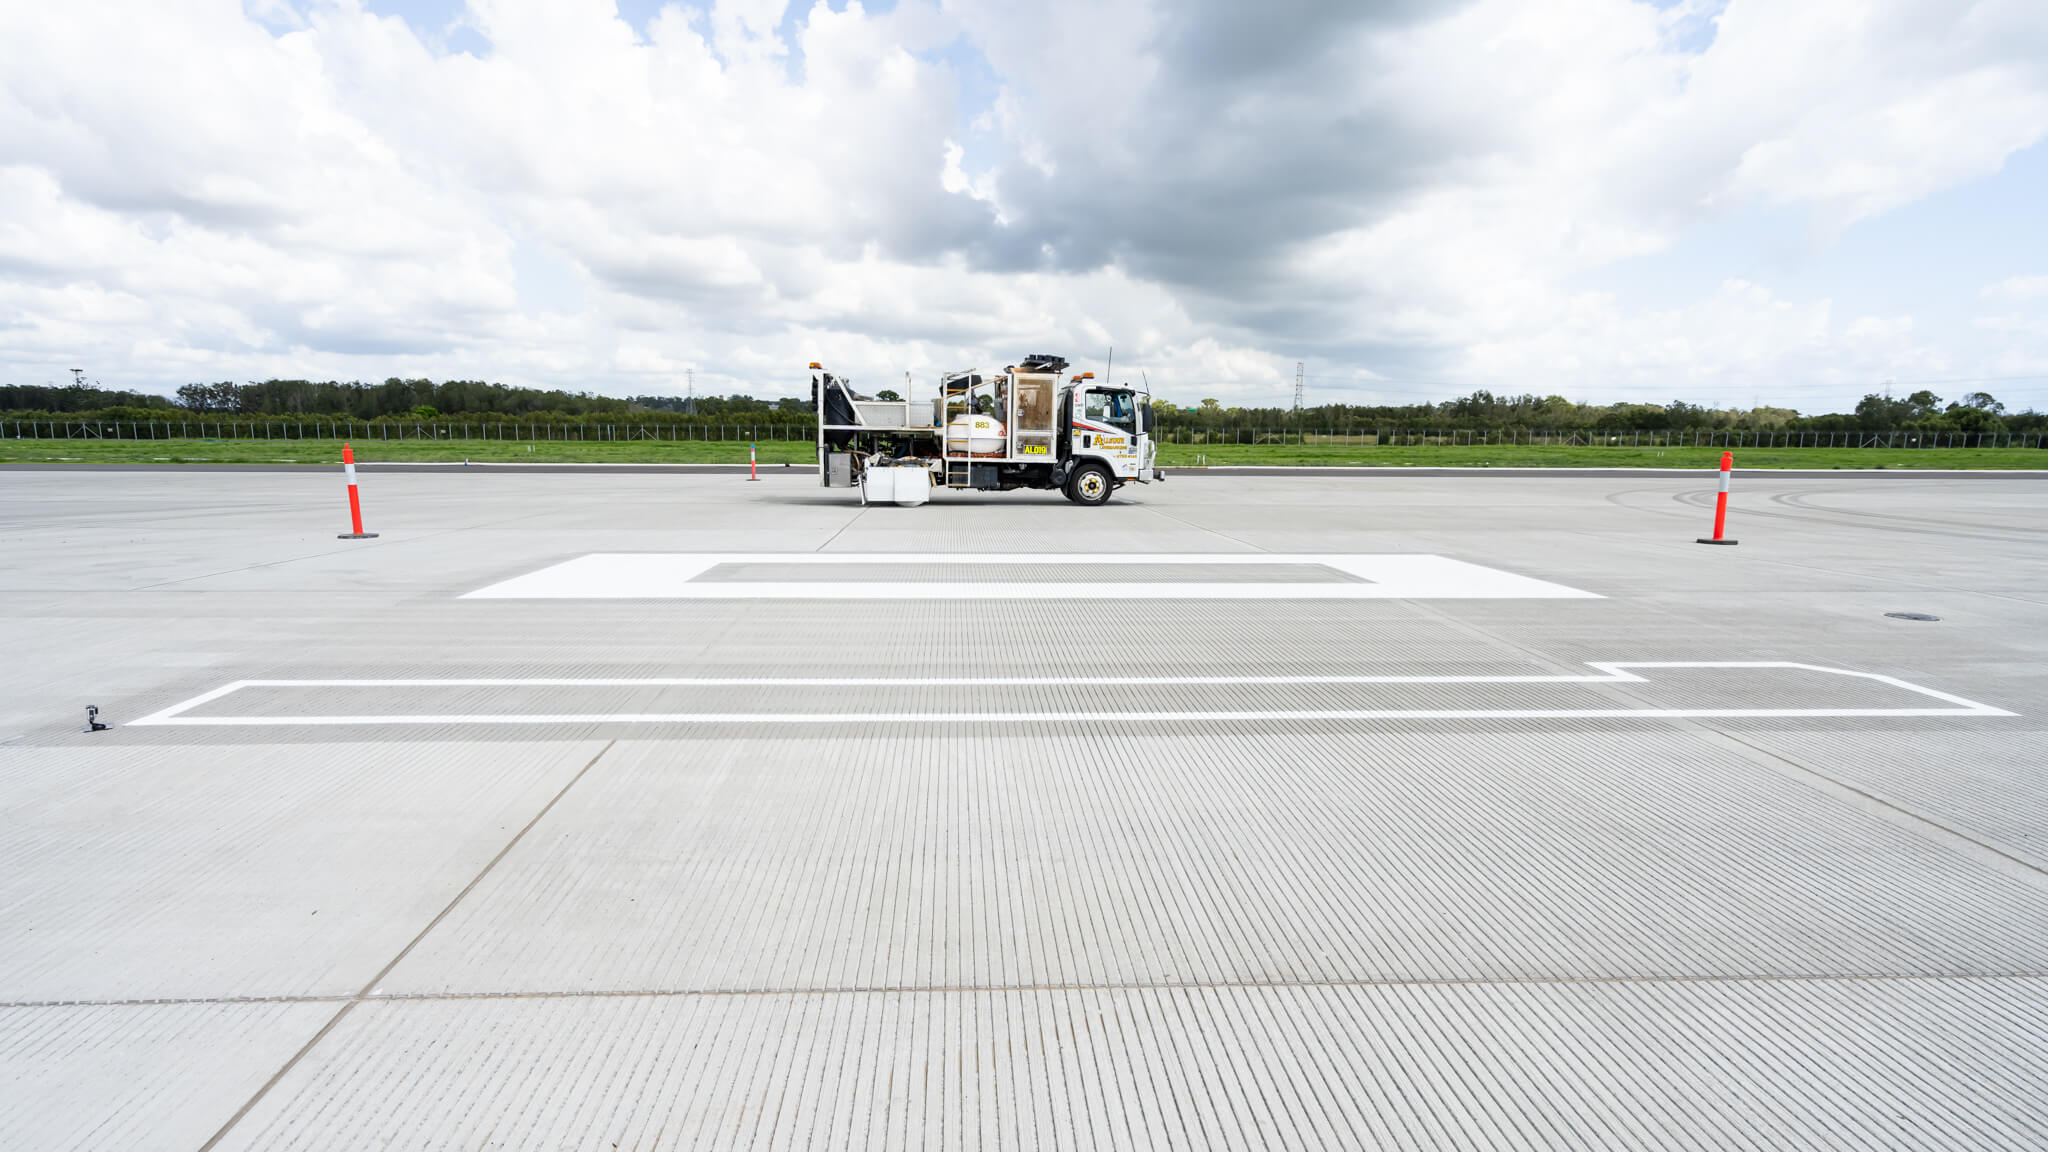 a truck on a runway